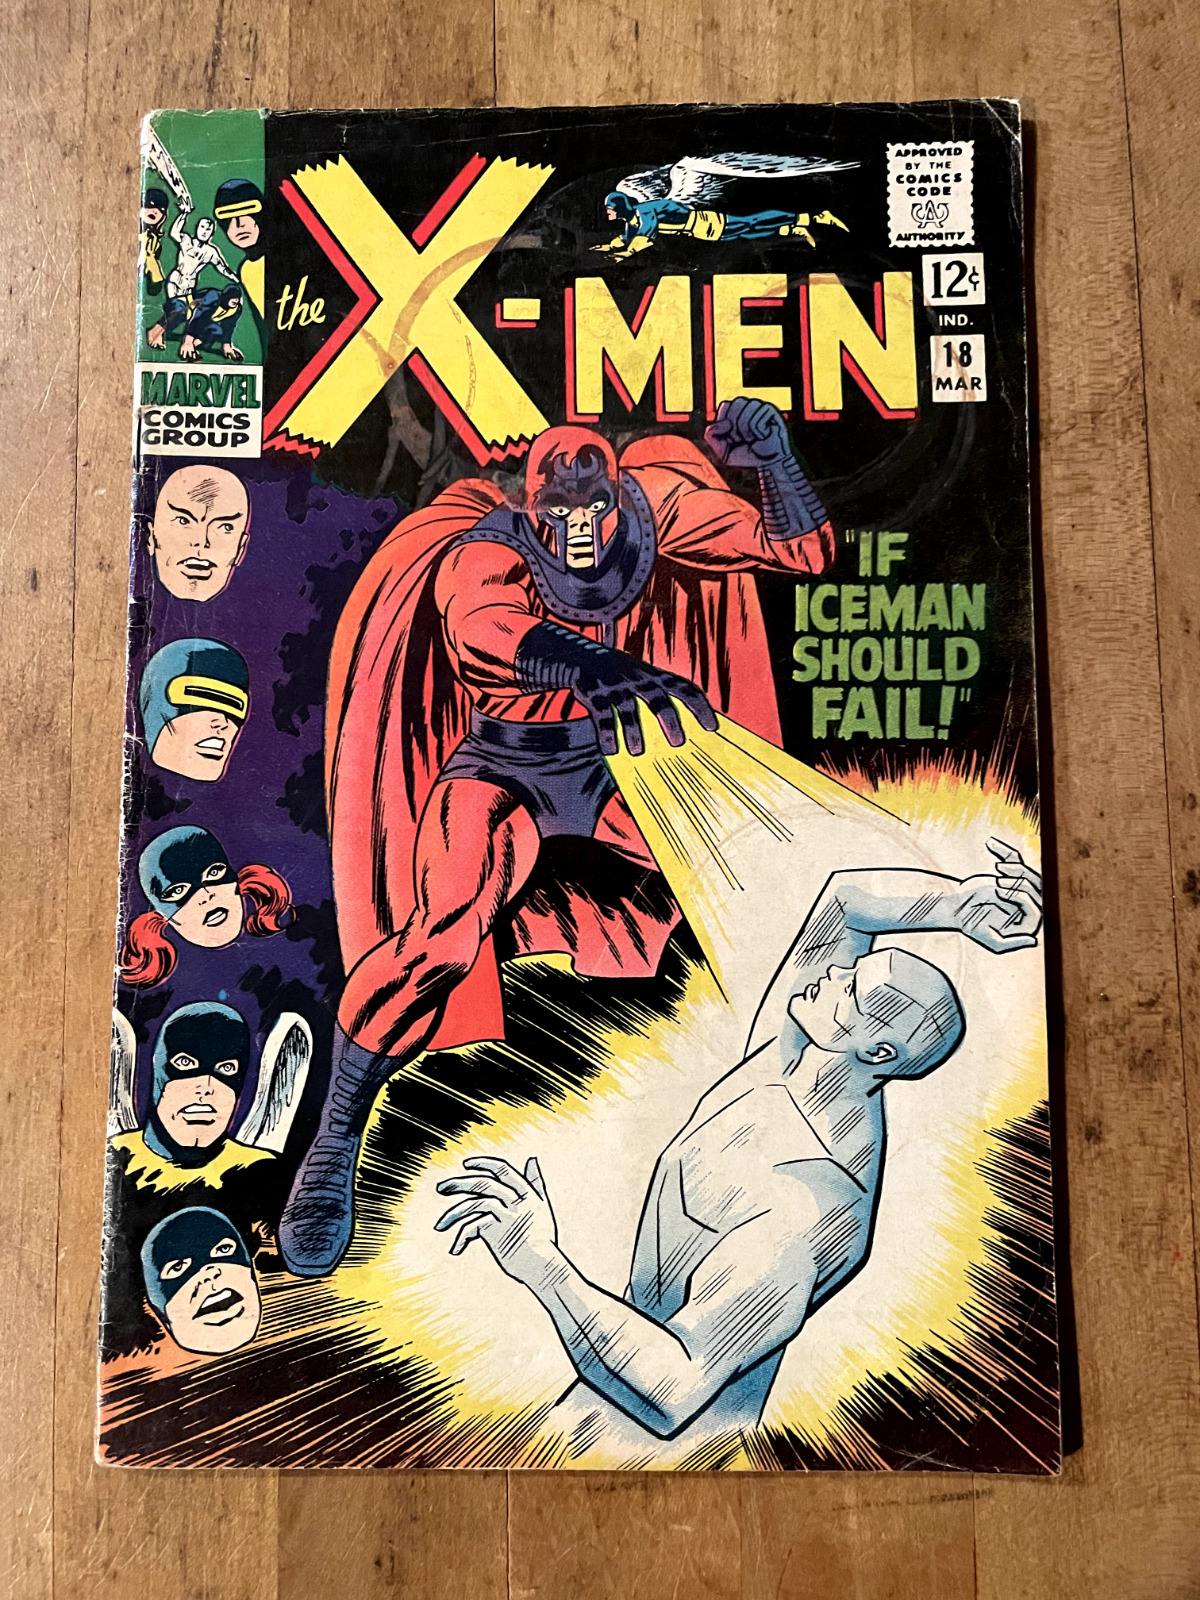 X-Men #18 - Magneto vs Iceman 1966